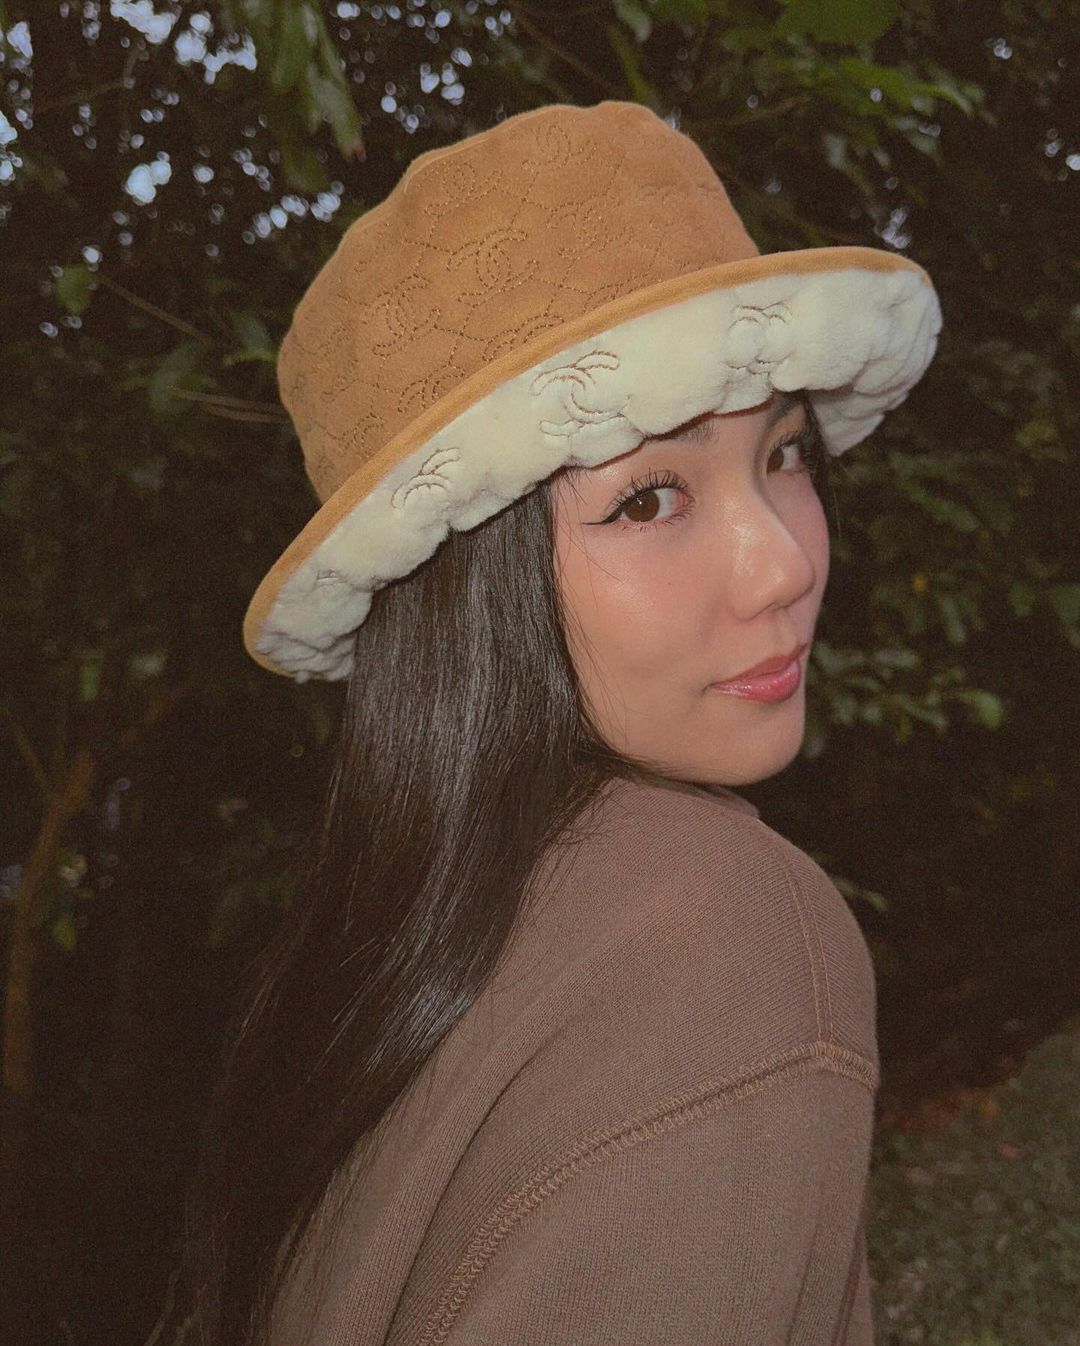 Yoyo Cao in a Chanel hat